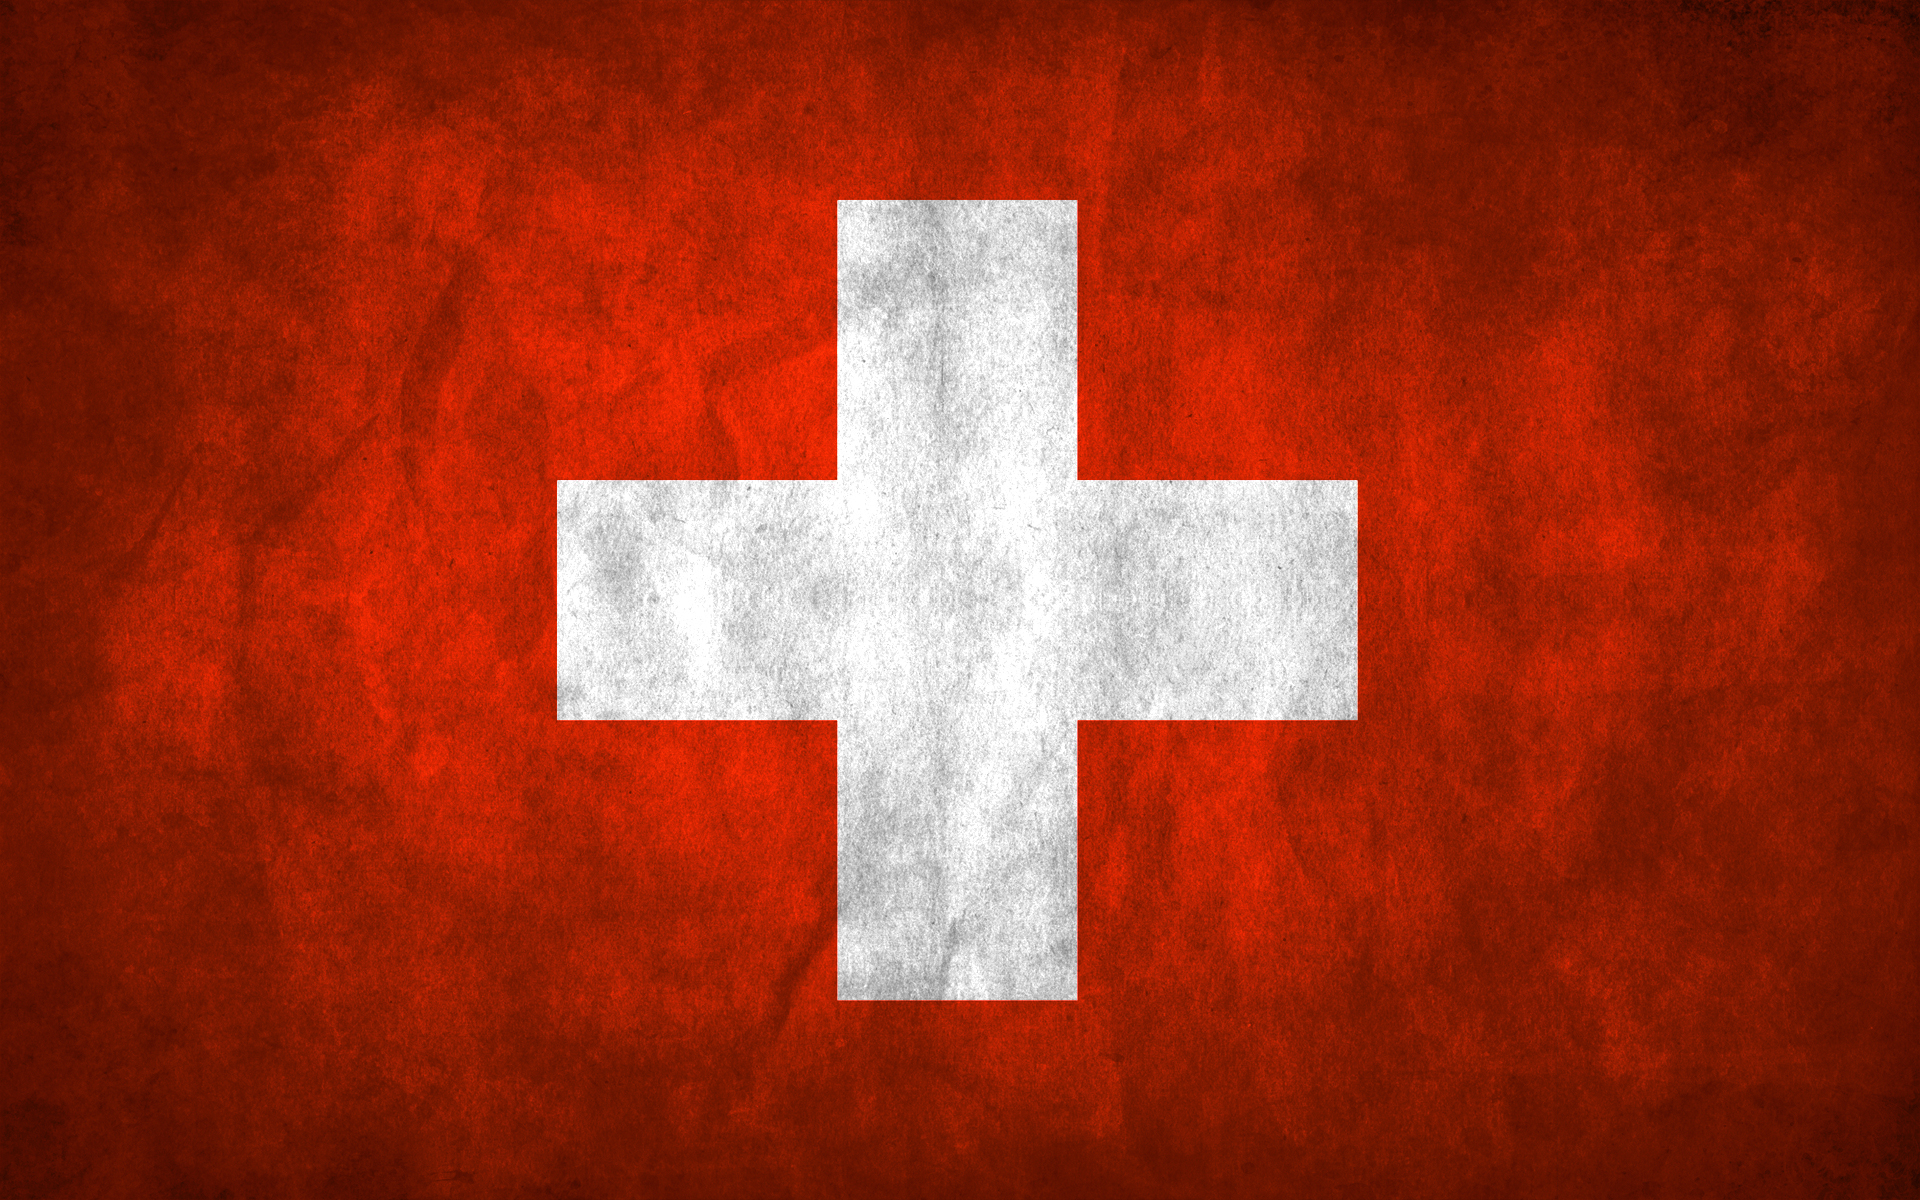 Switzerland flag wallpaper